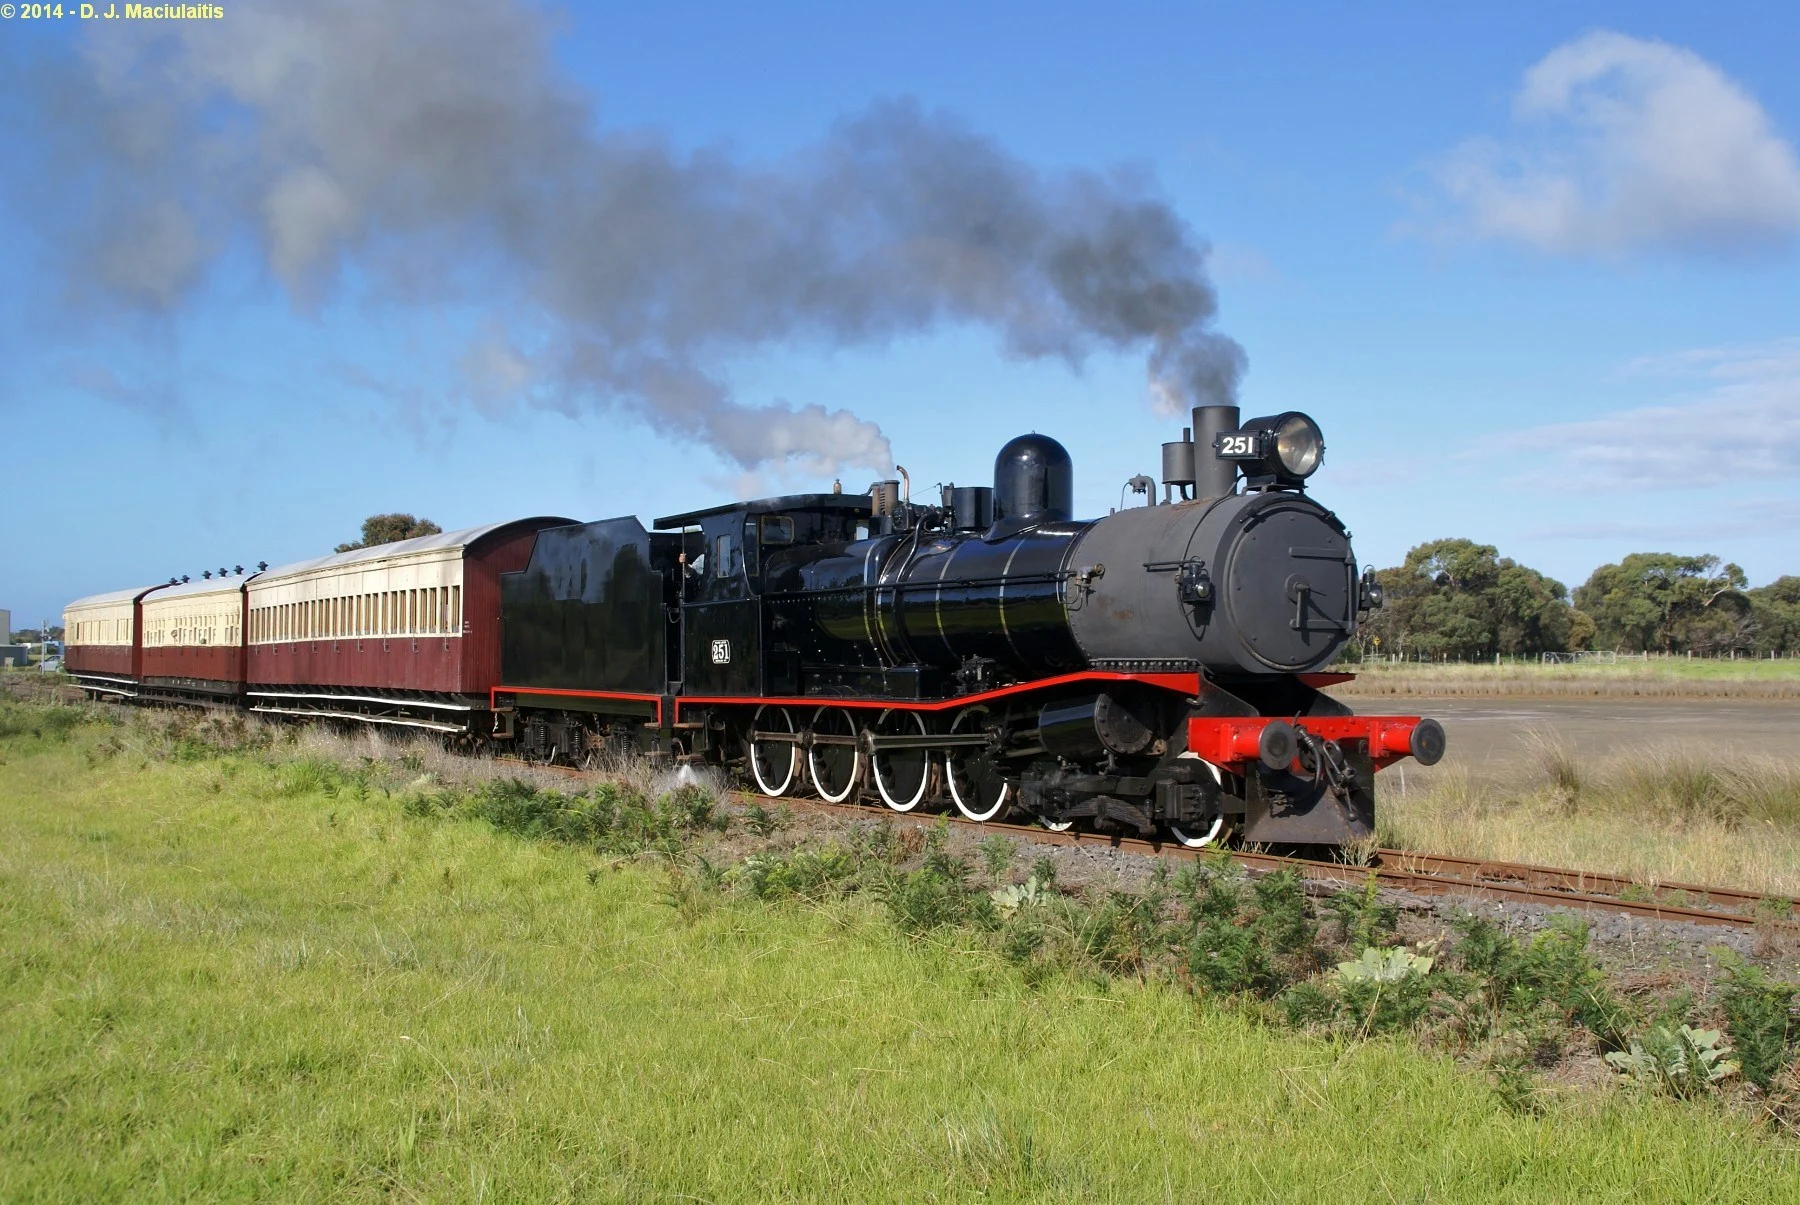 A steam engine train on the Bellarine Railway. The railway runs from Queenscliff to Drysdale.